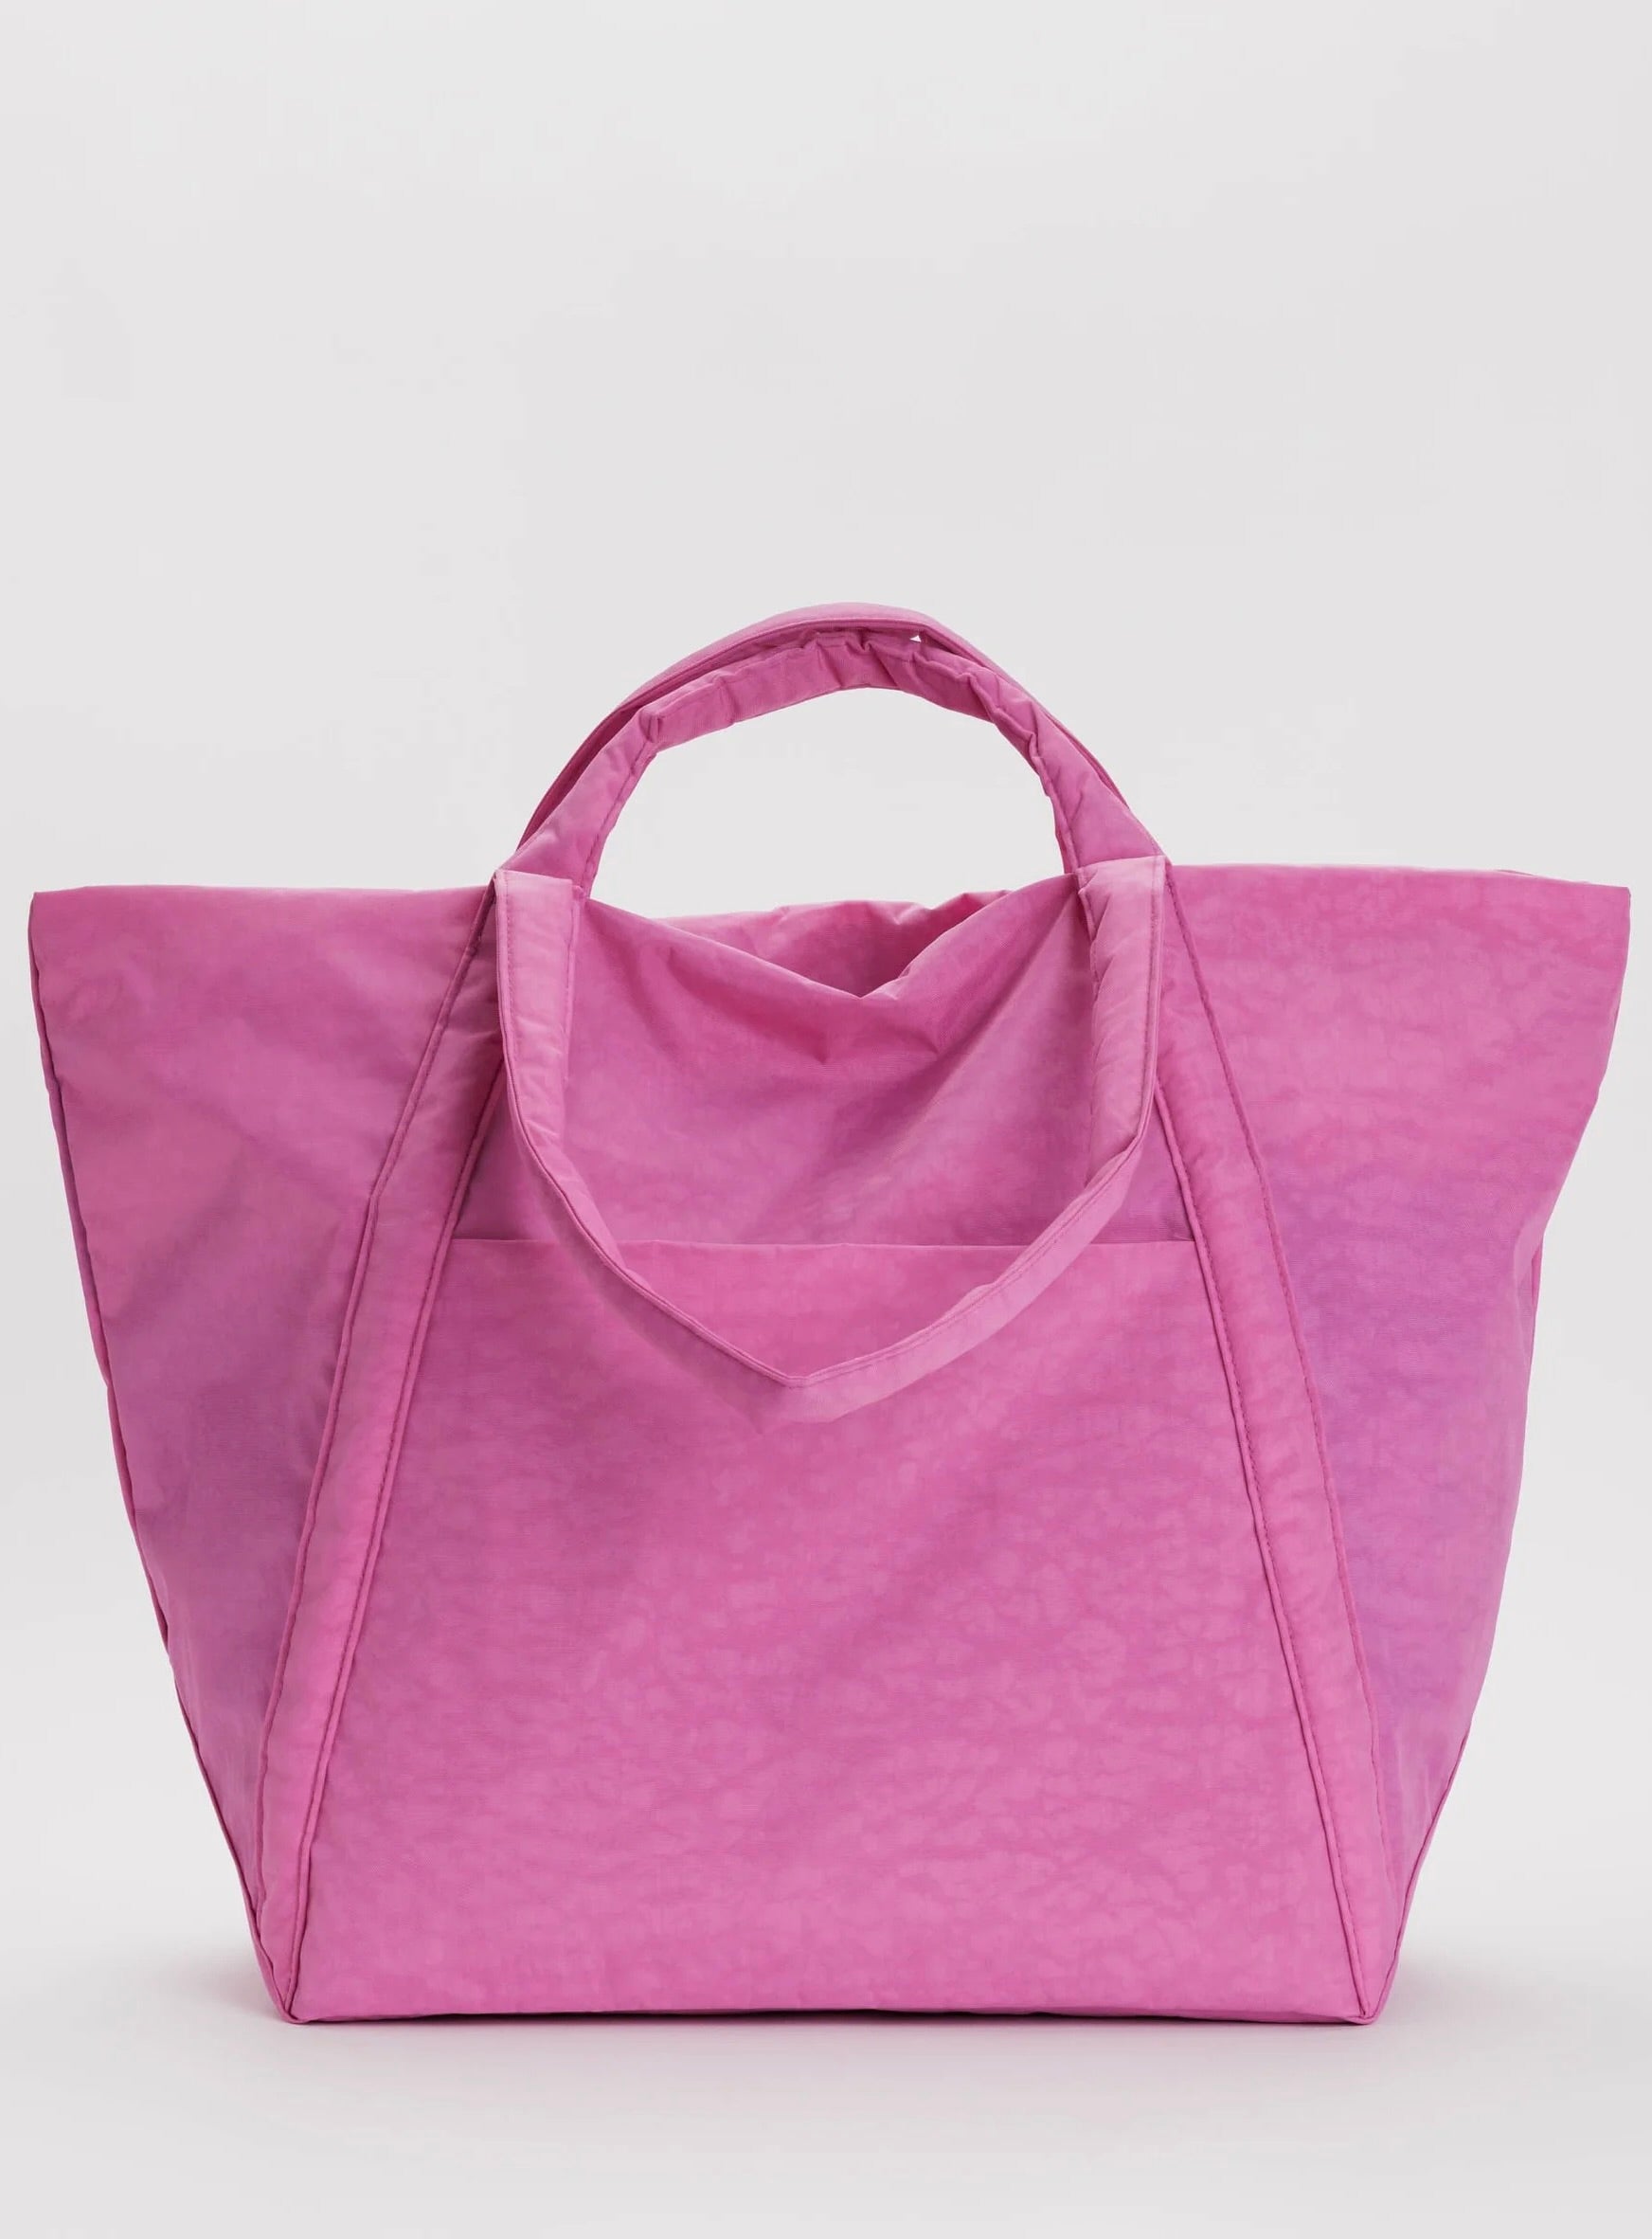 BAGGU Travel Cloud Bag / Extra Pink